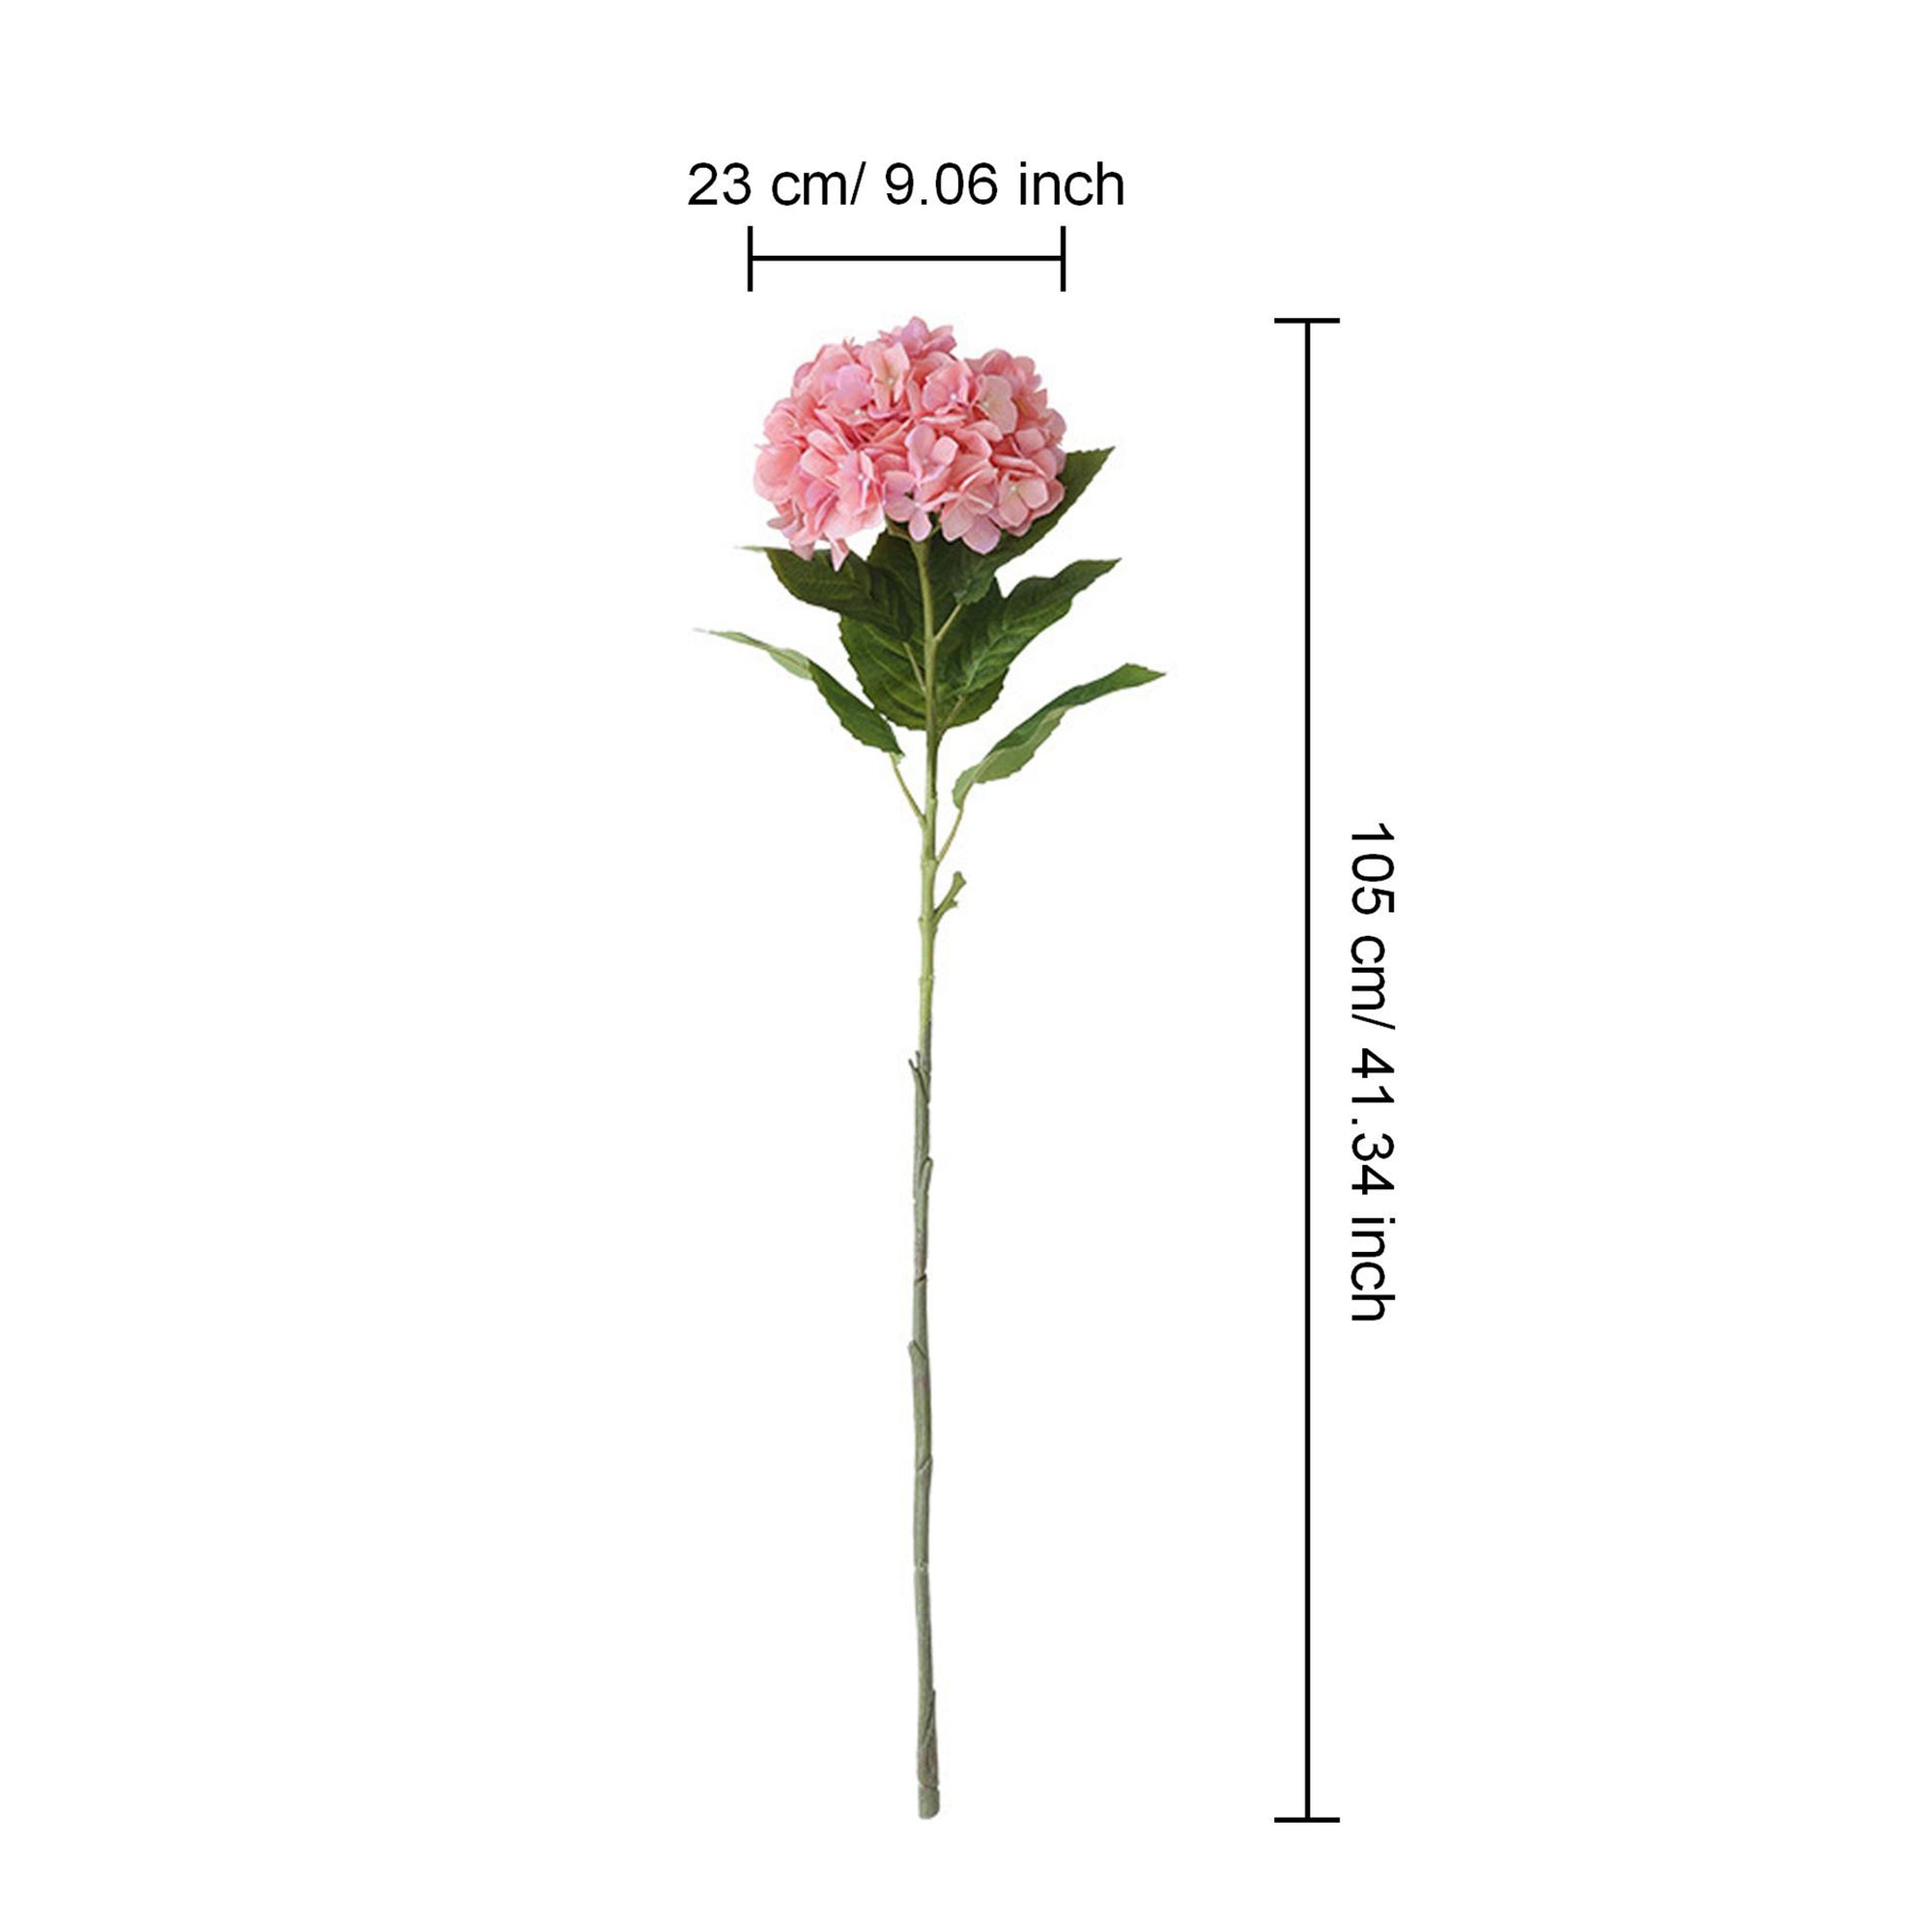 Giant Artificial Hydrangea Flowers Long Stem